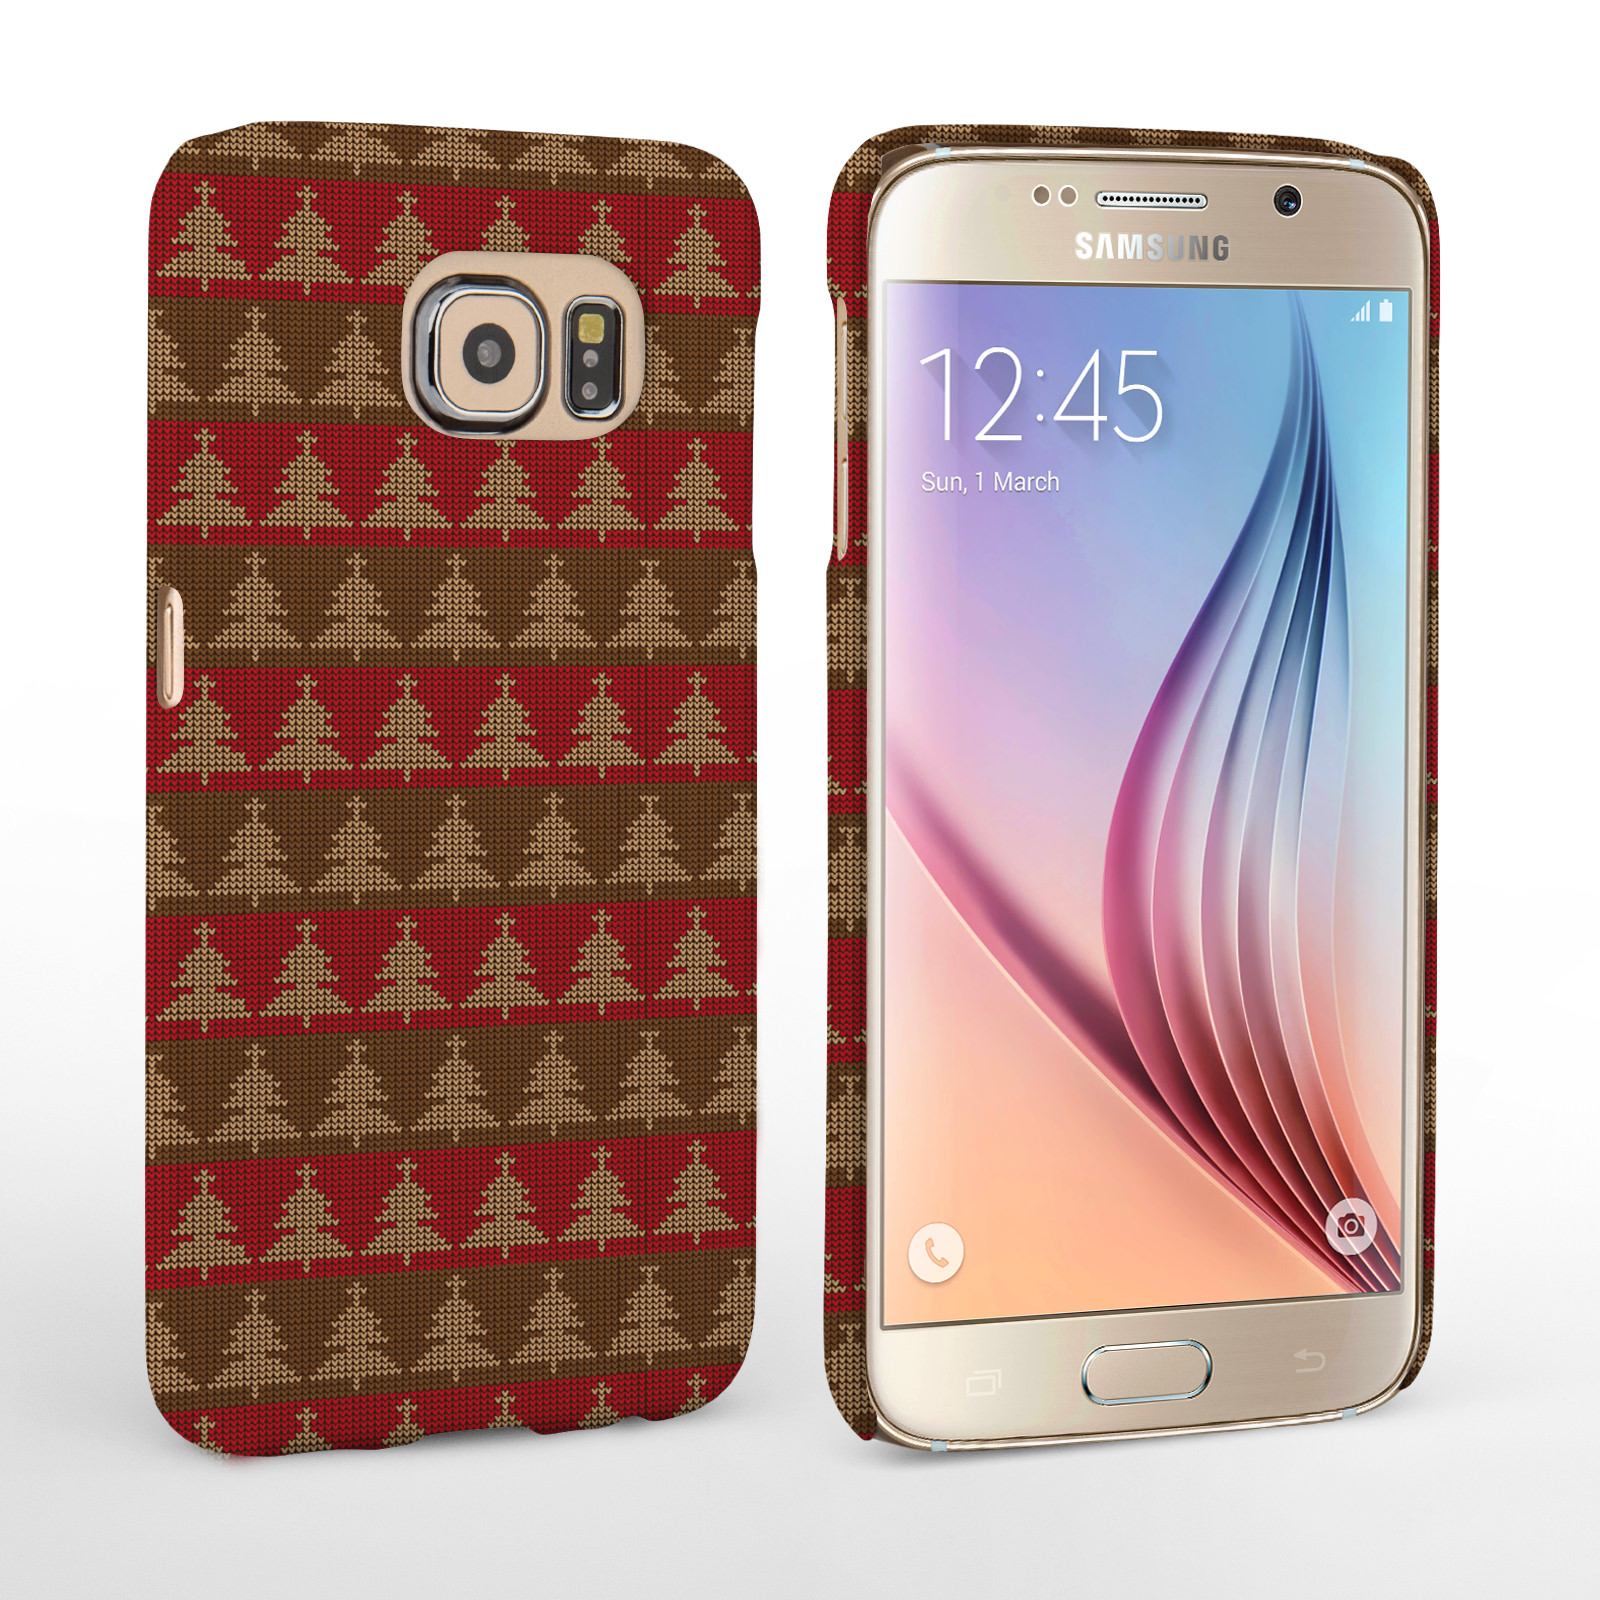 Caseflex Samsung Galaxy S6 Christmas Tree Knit Jumper Hard Case - Brown / Red